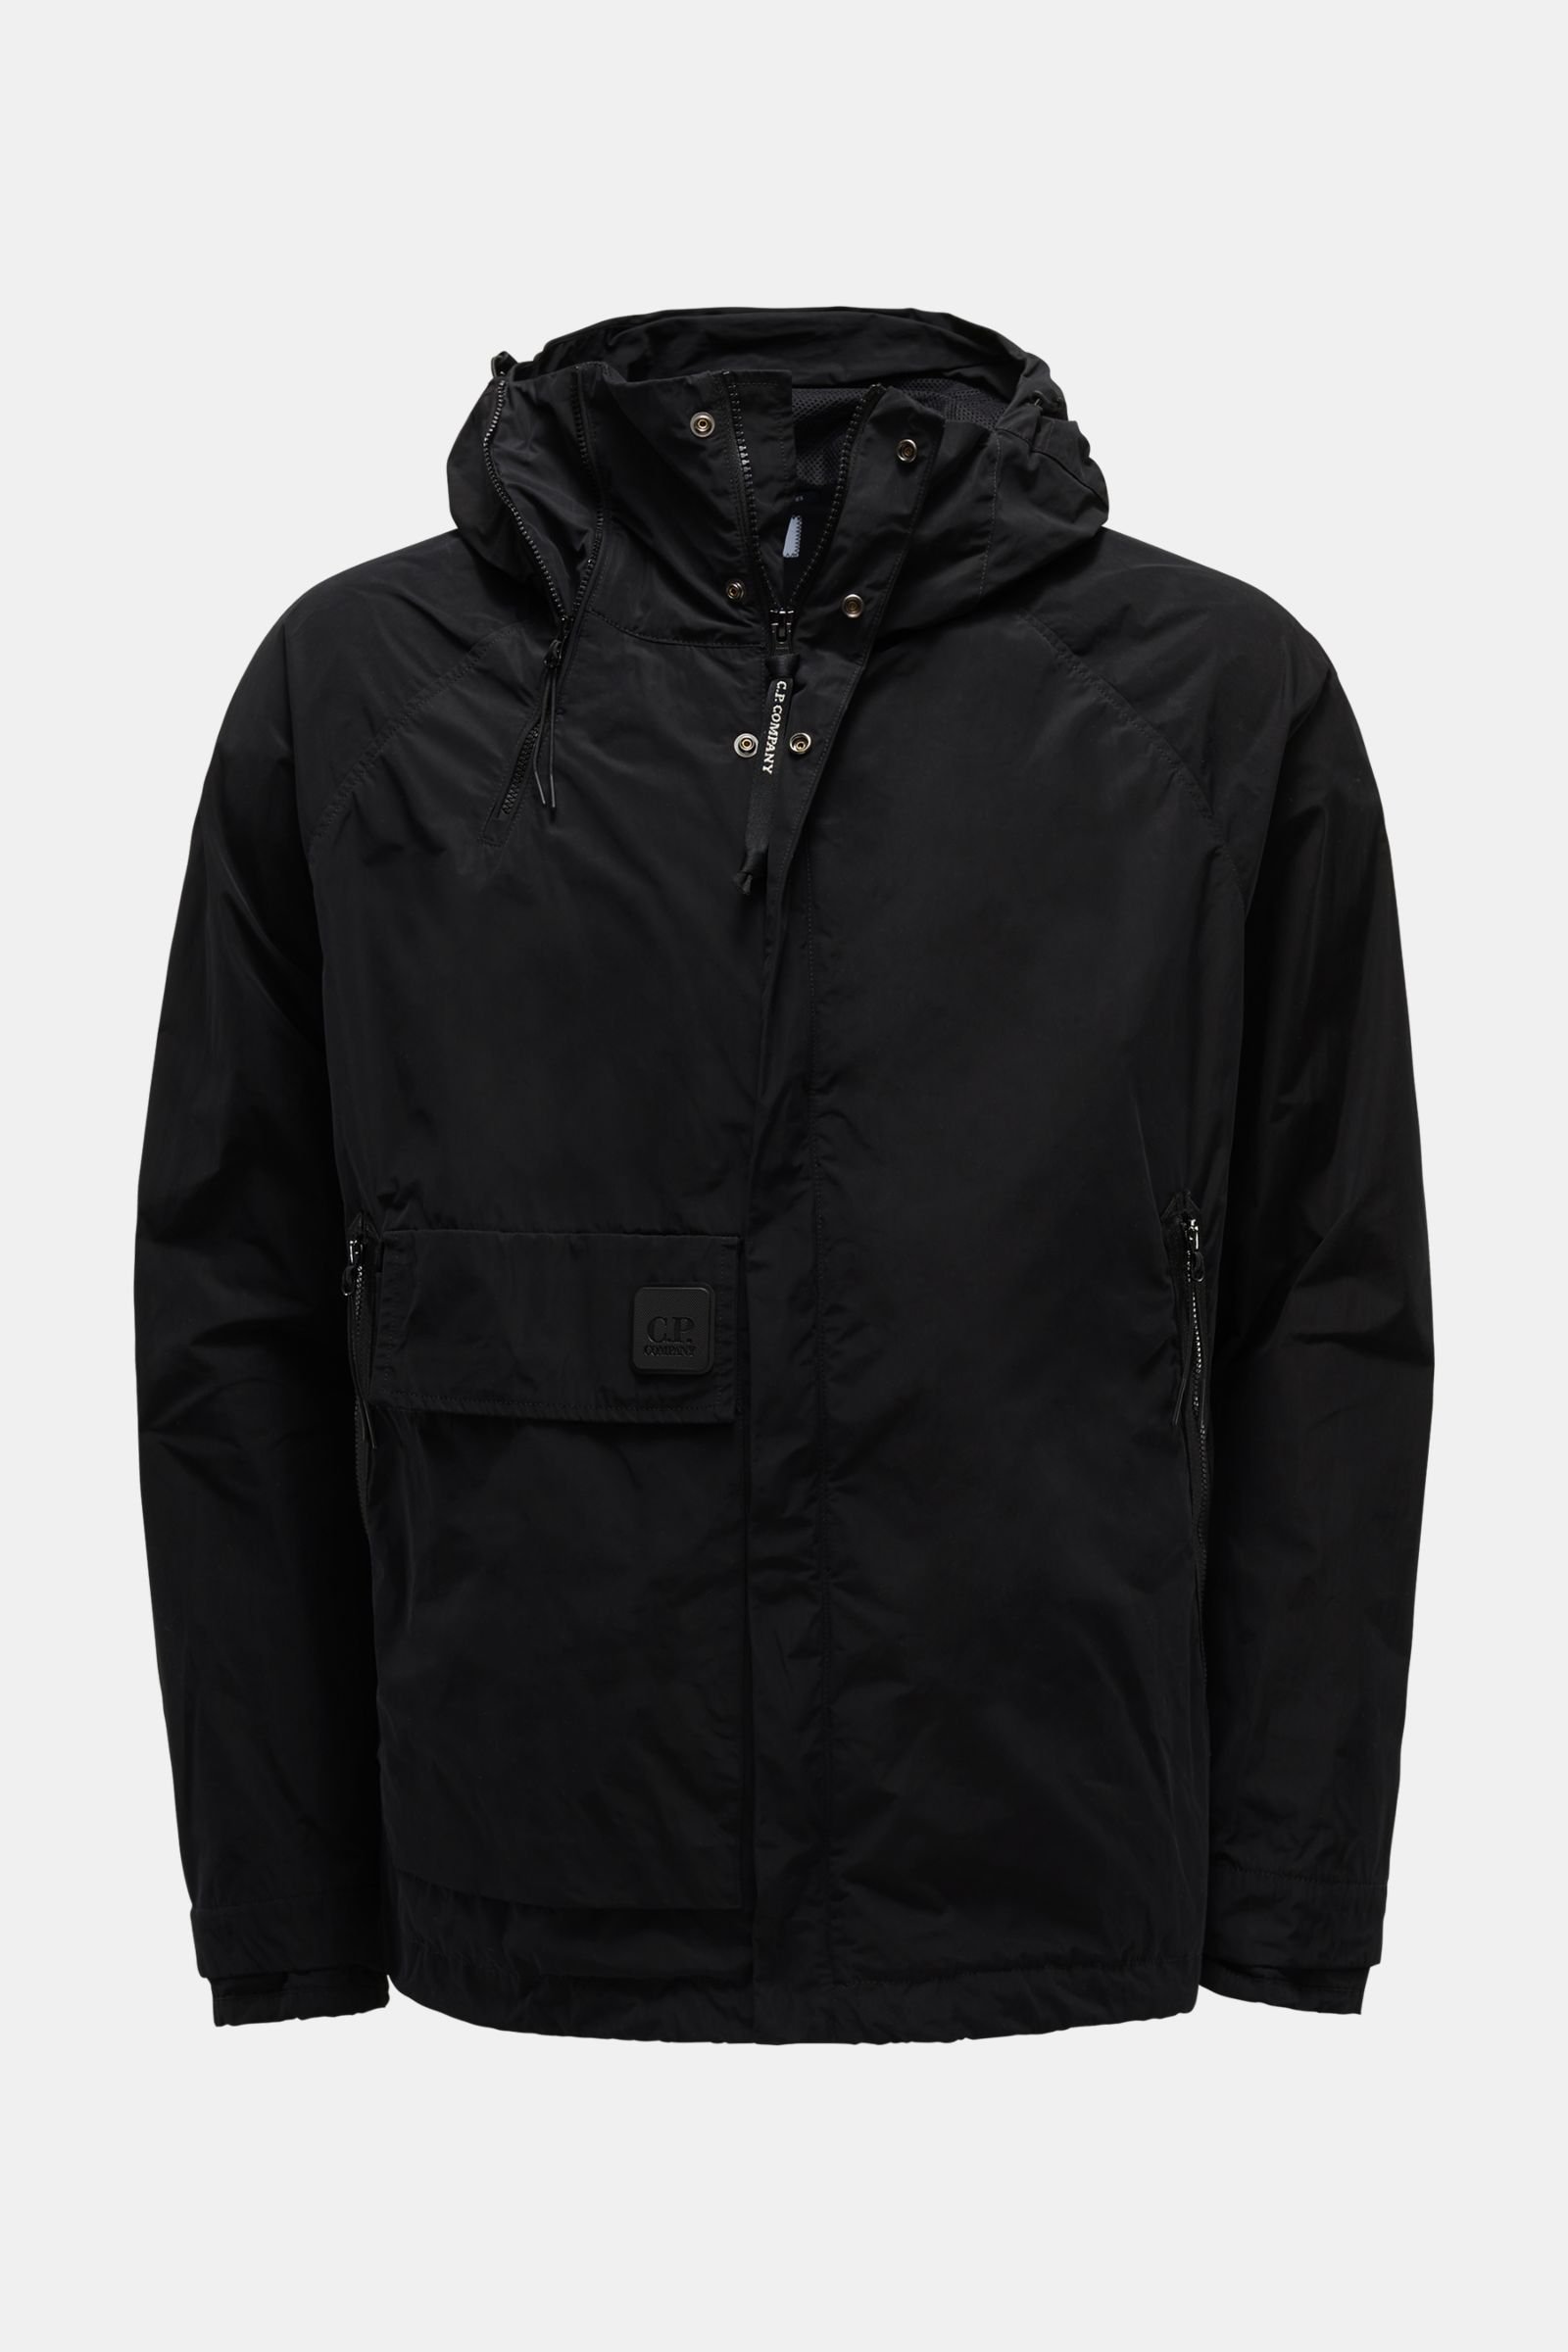 C.P. COMPANY jacket black | BRAUN Hamburg